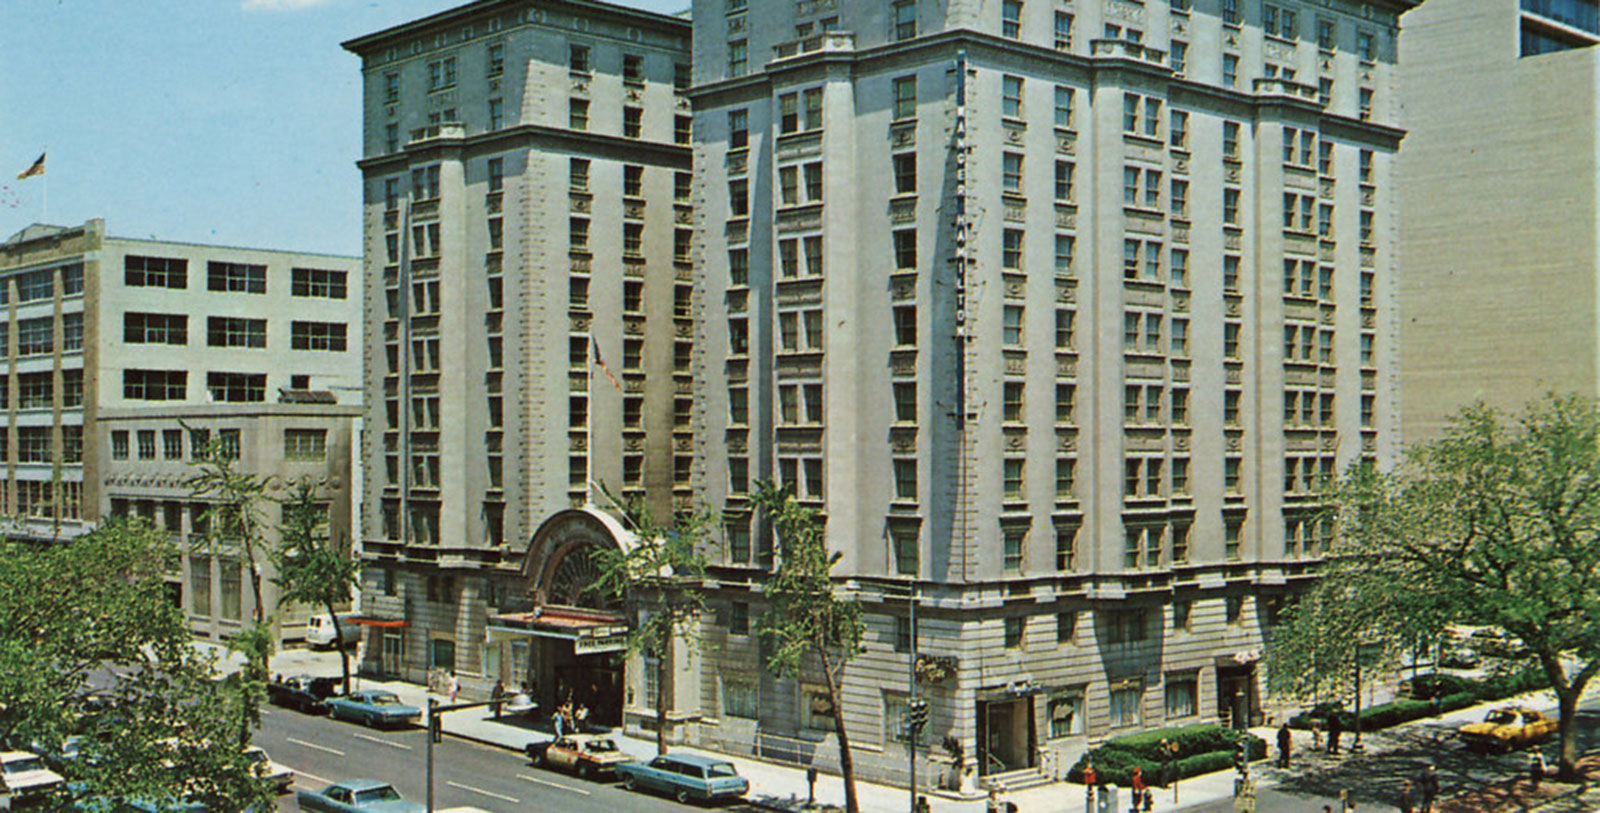 Historic Image of The Hamilton Hotel in Washington, DC